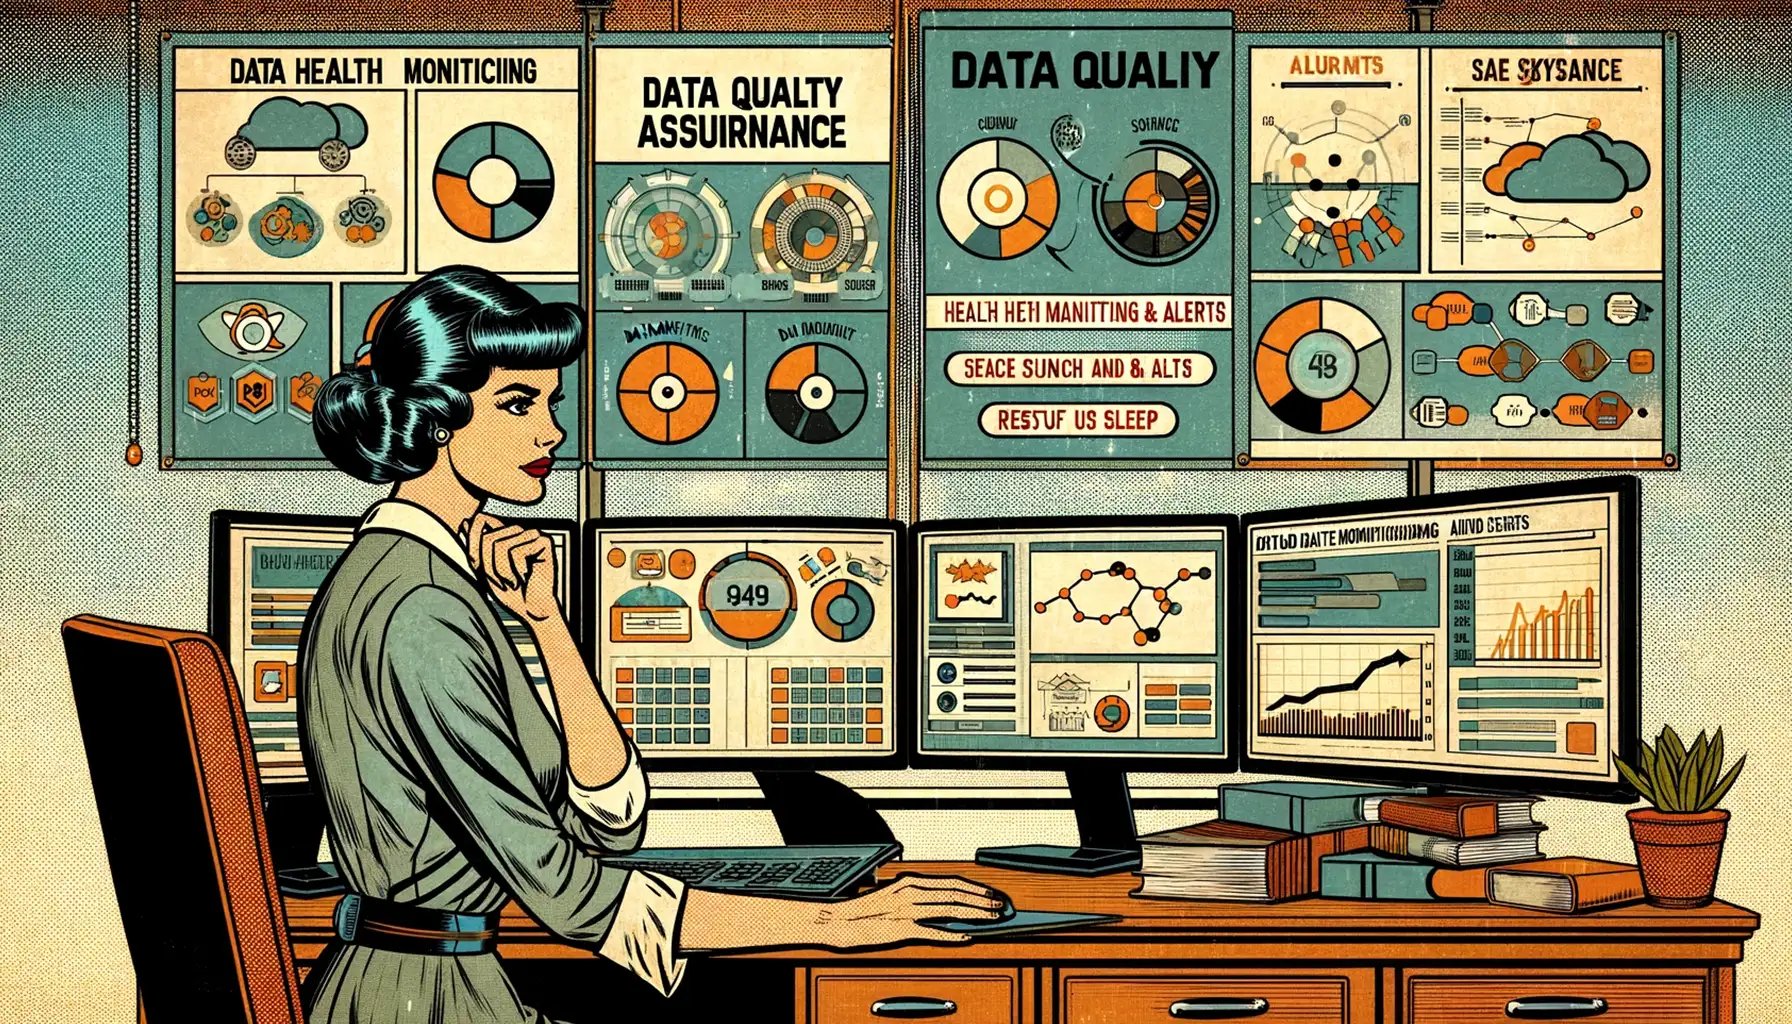 Data Quality Assurance